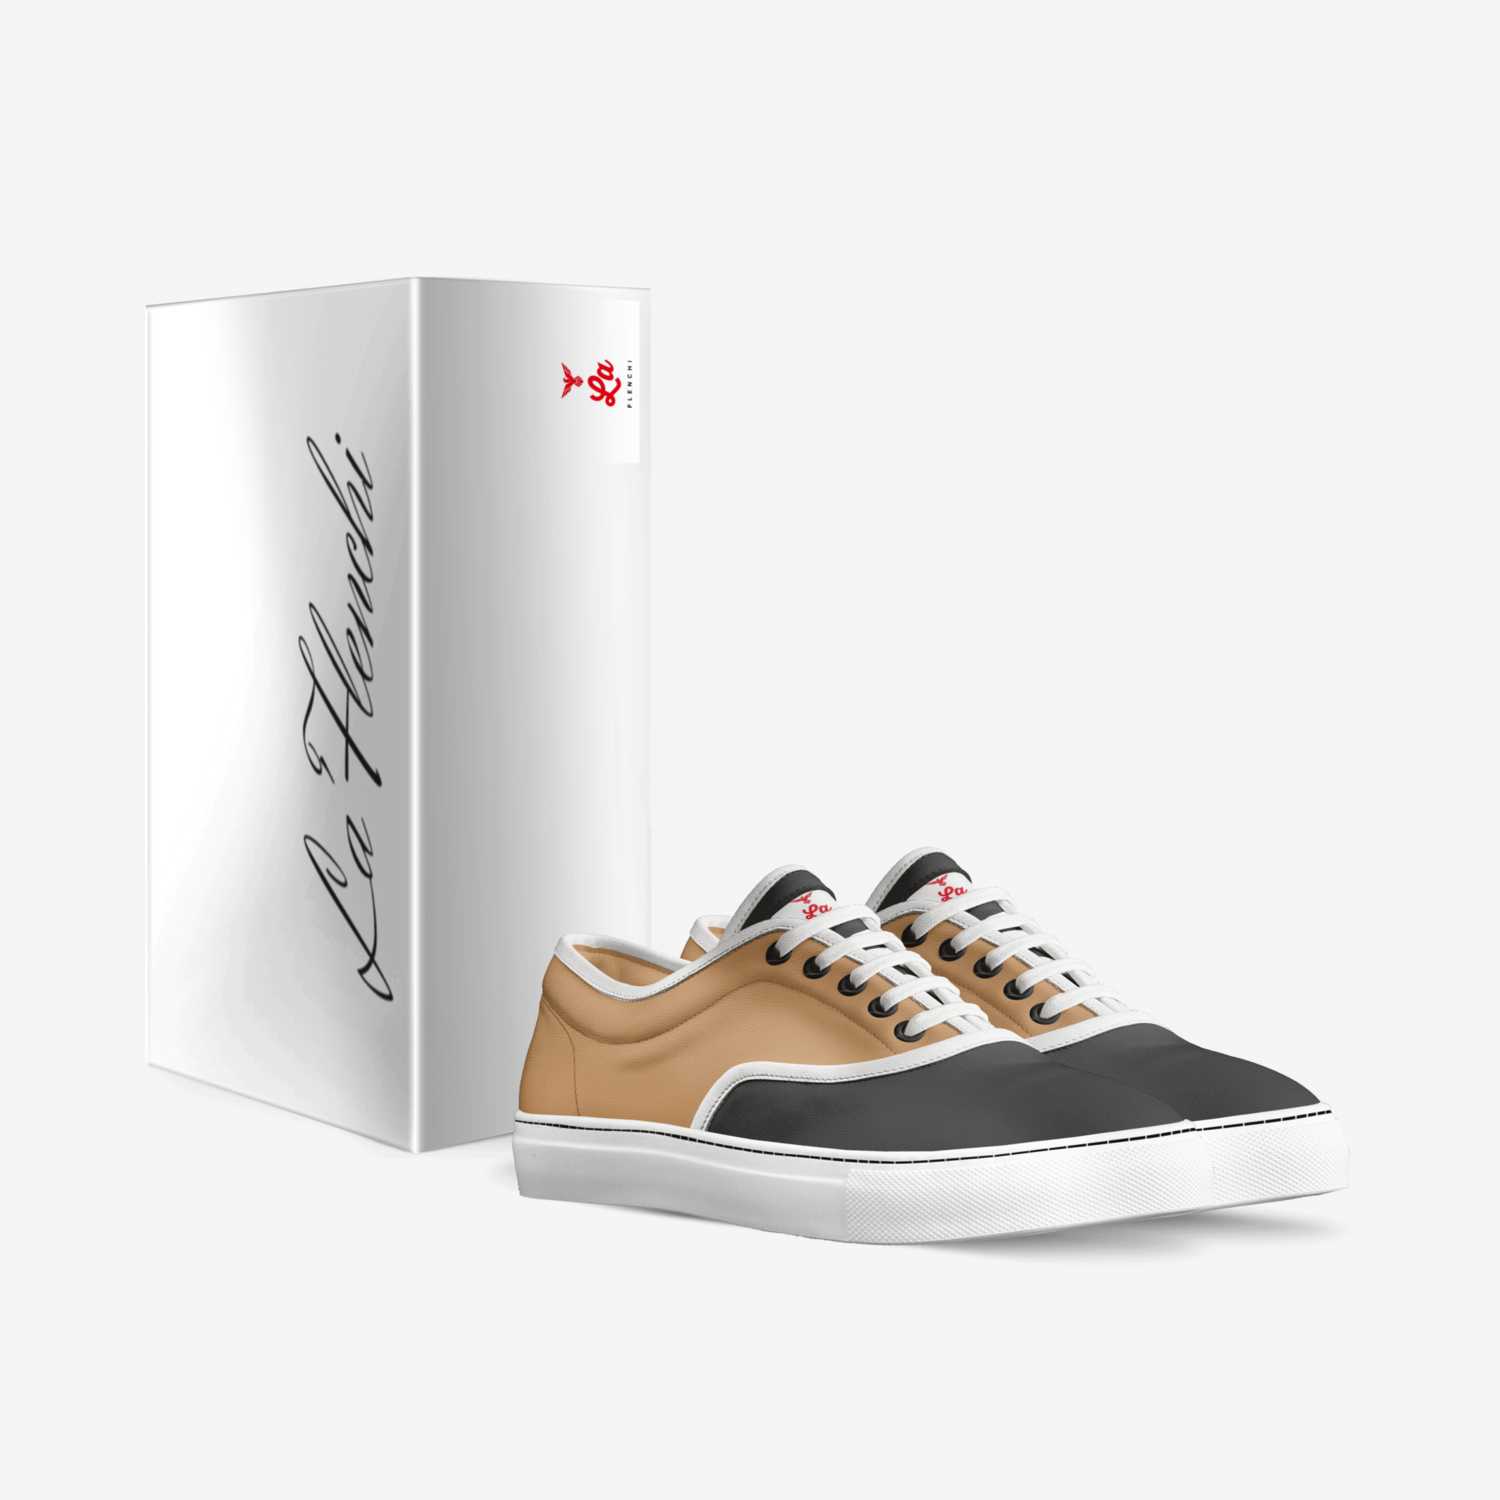 La'Flenchi custom made in Italy shoes by Leondra Britten | Box view